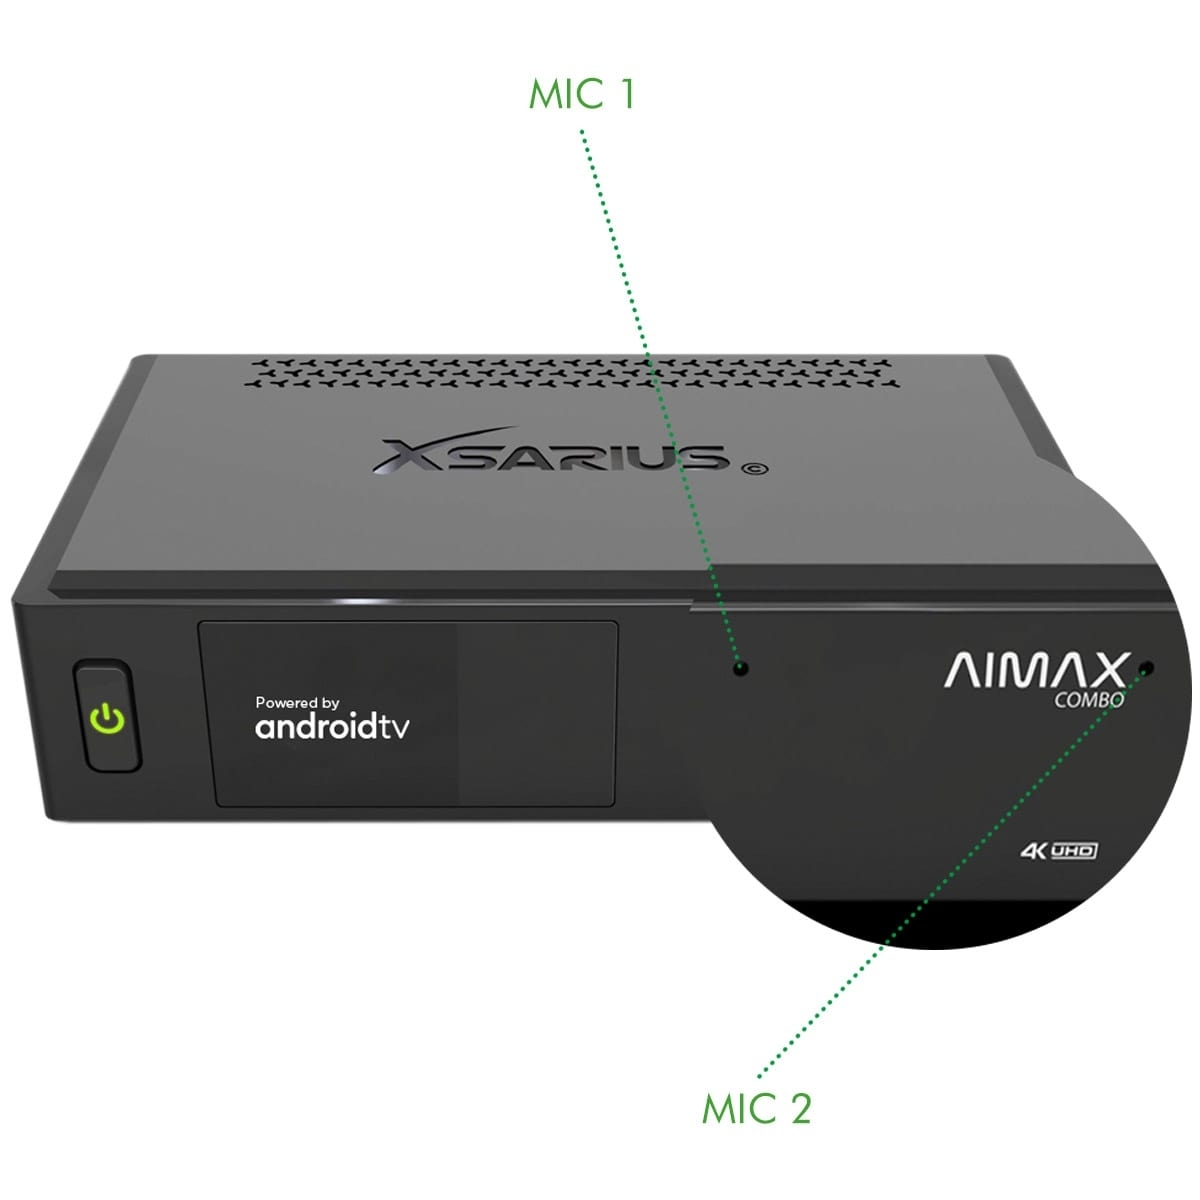 Dual-WiFi, XSARIUS Hybrid MicroSD) & 4K Schwarz) Sat DVB-S2X Mediaplayer AI, COMBO 8.0, UHD (Android 4K Kabel IP-Receiver Sat DVB-C AIMAX (PVR-Funktion,